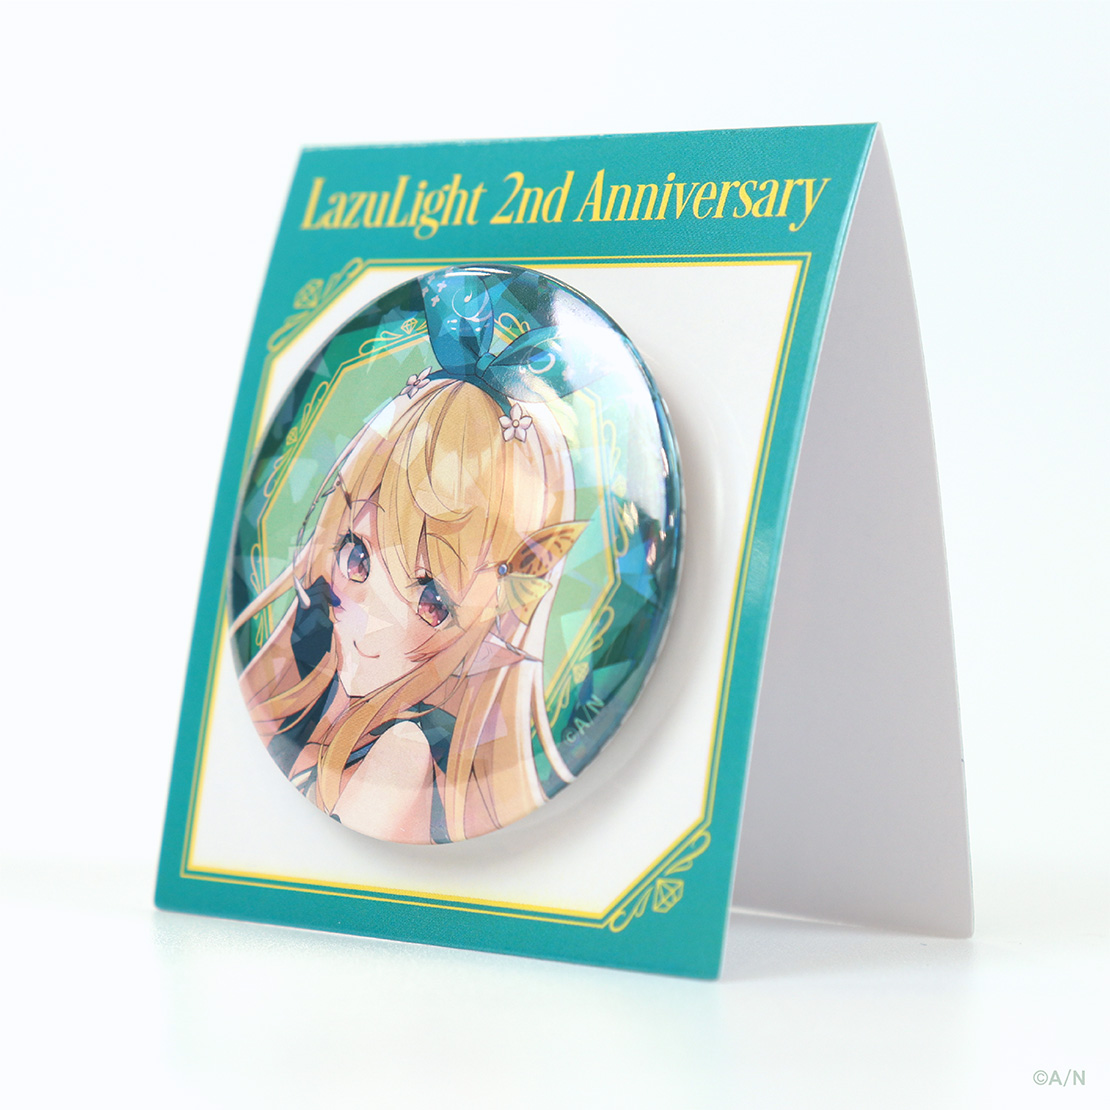  [In-stock]  Nijisanji Lazu Light 2nd Anniversary Goods